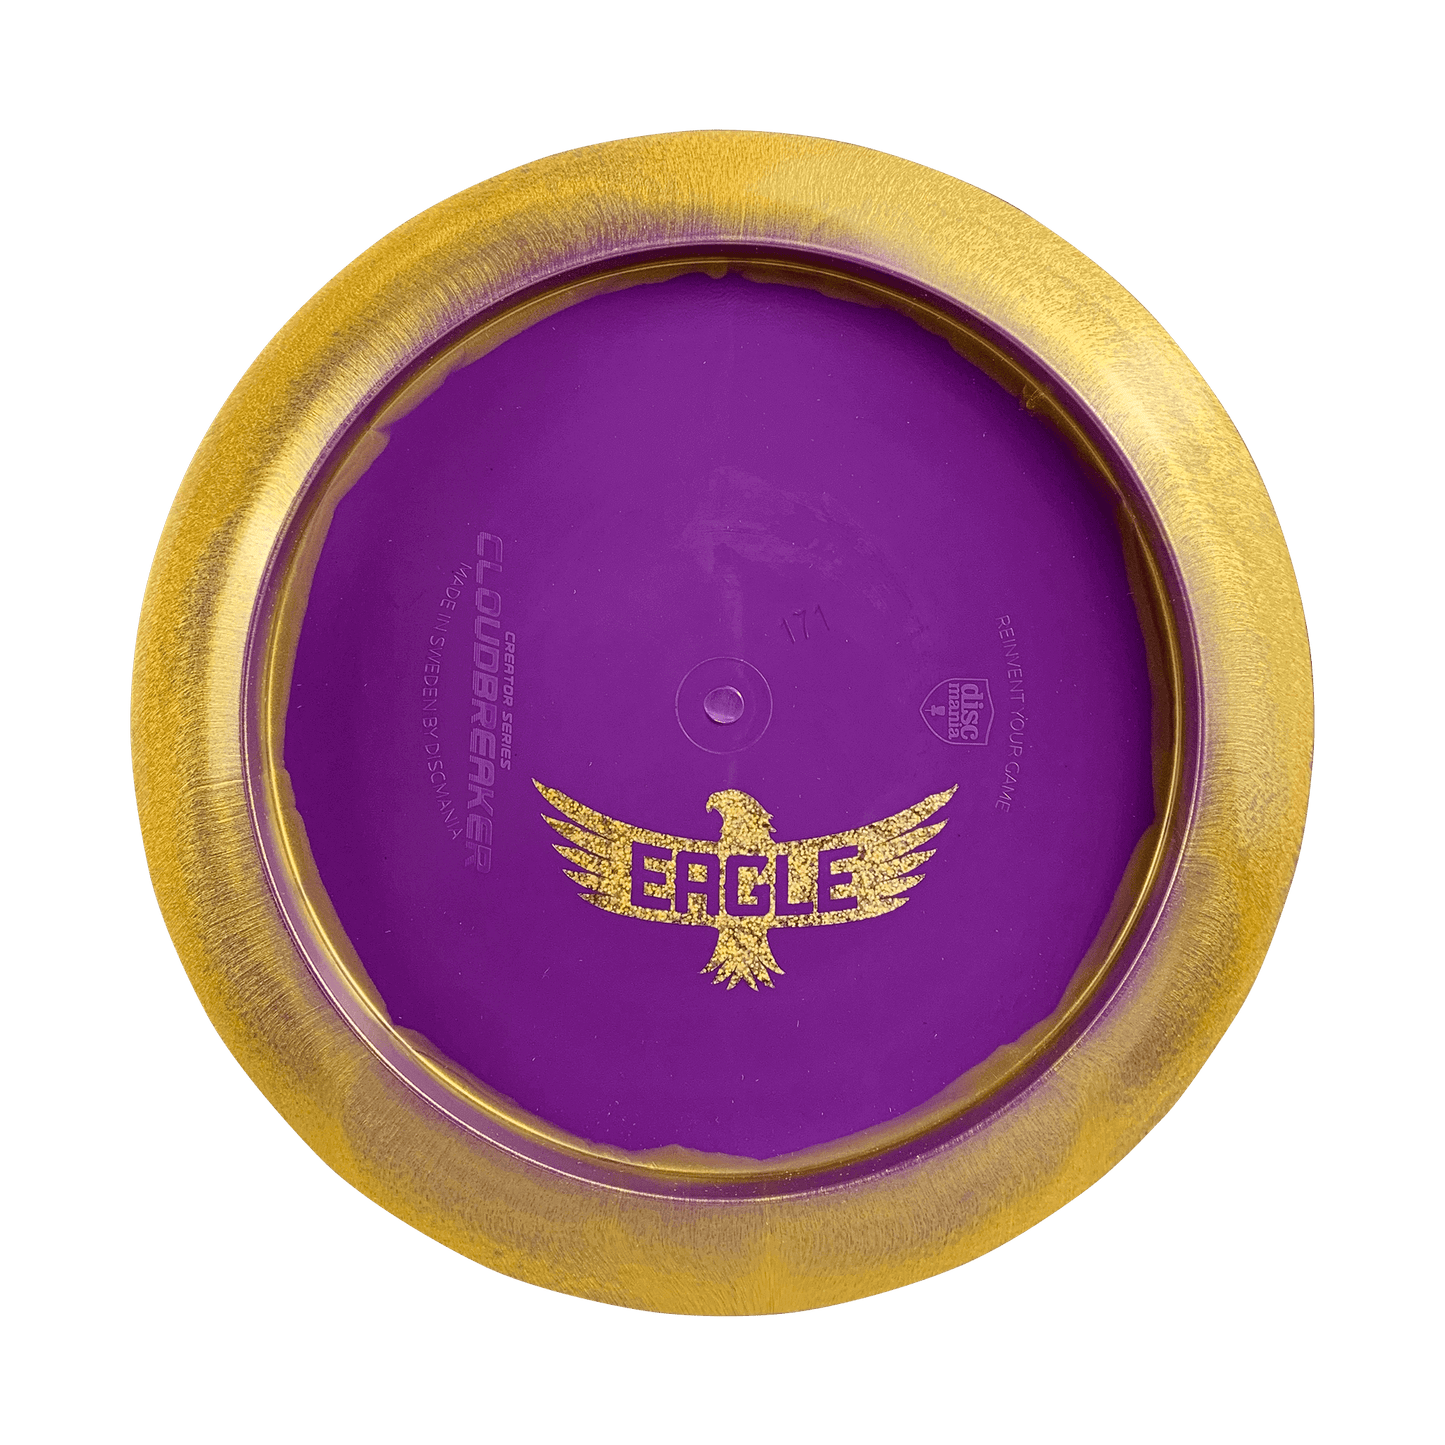 Golden Horizon Cloud Breaker - Eagle Bottom Stamp Eagle McMahon Creator Series Disc Discmania gold / purple 171 